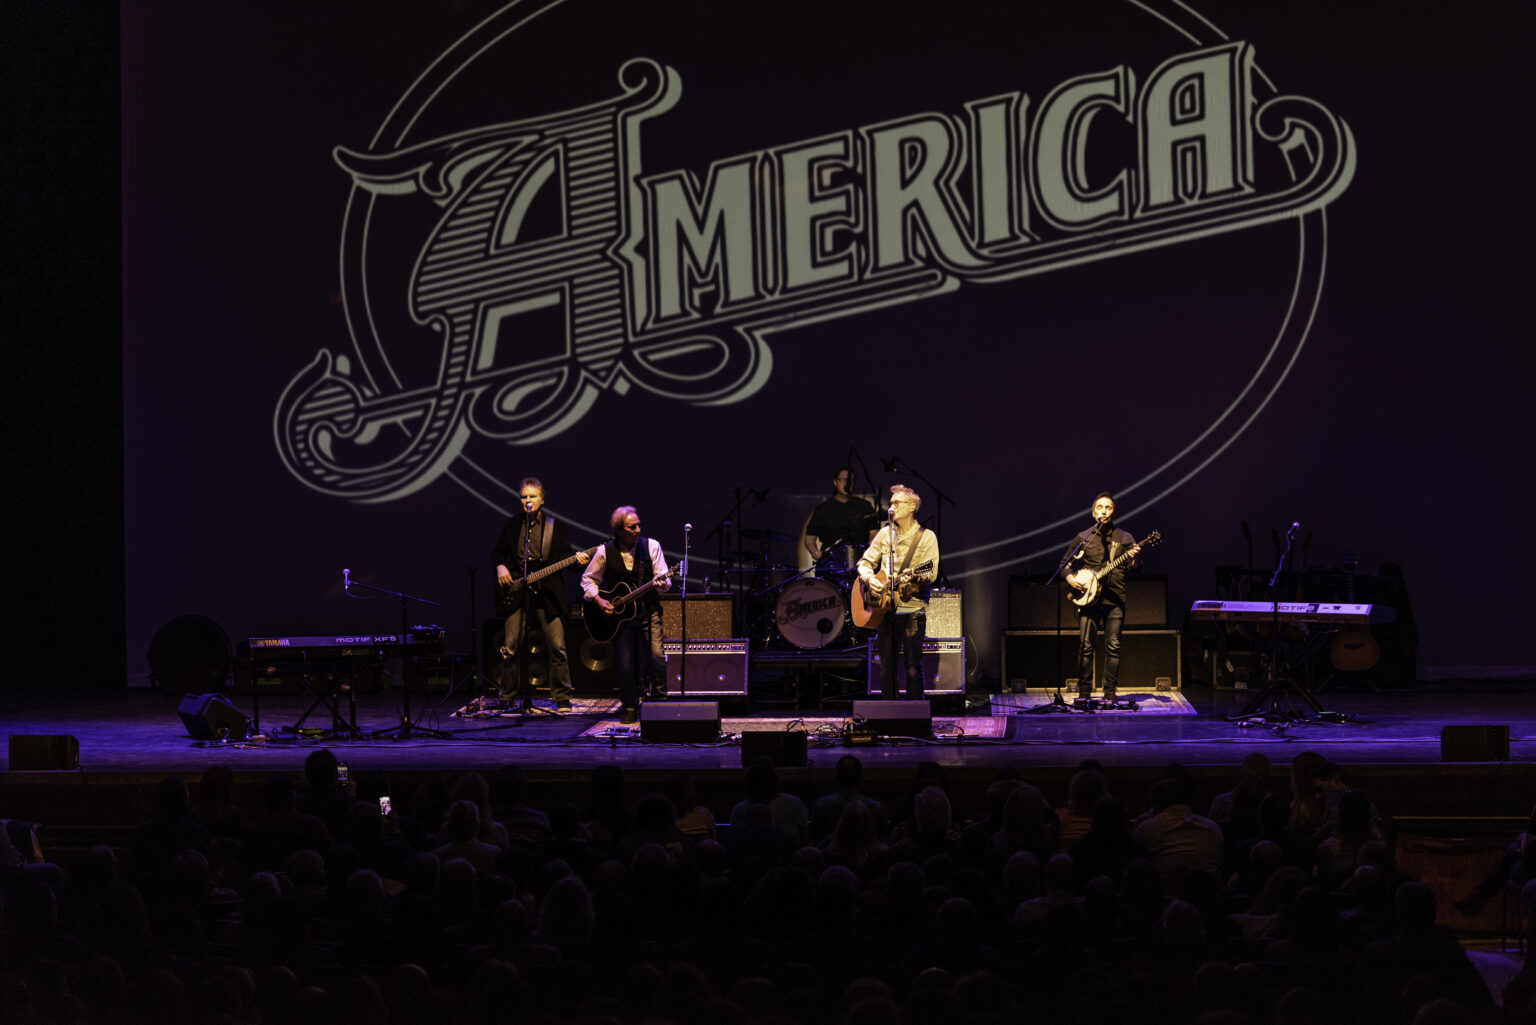 america 50th anniversary tour setlist